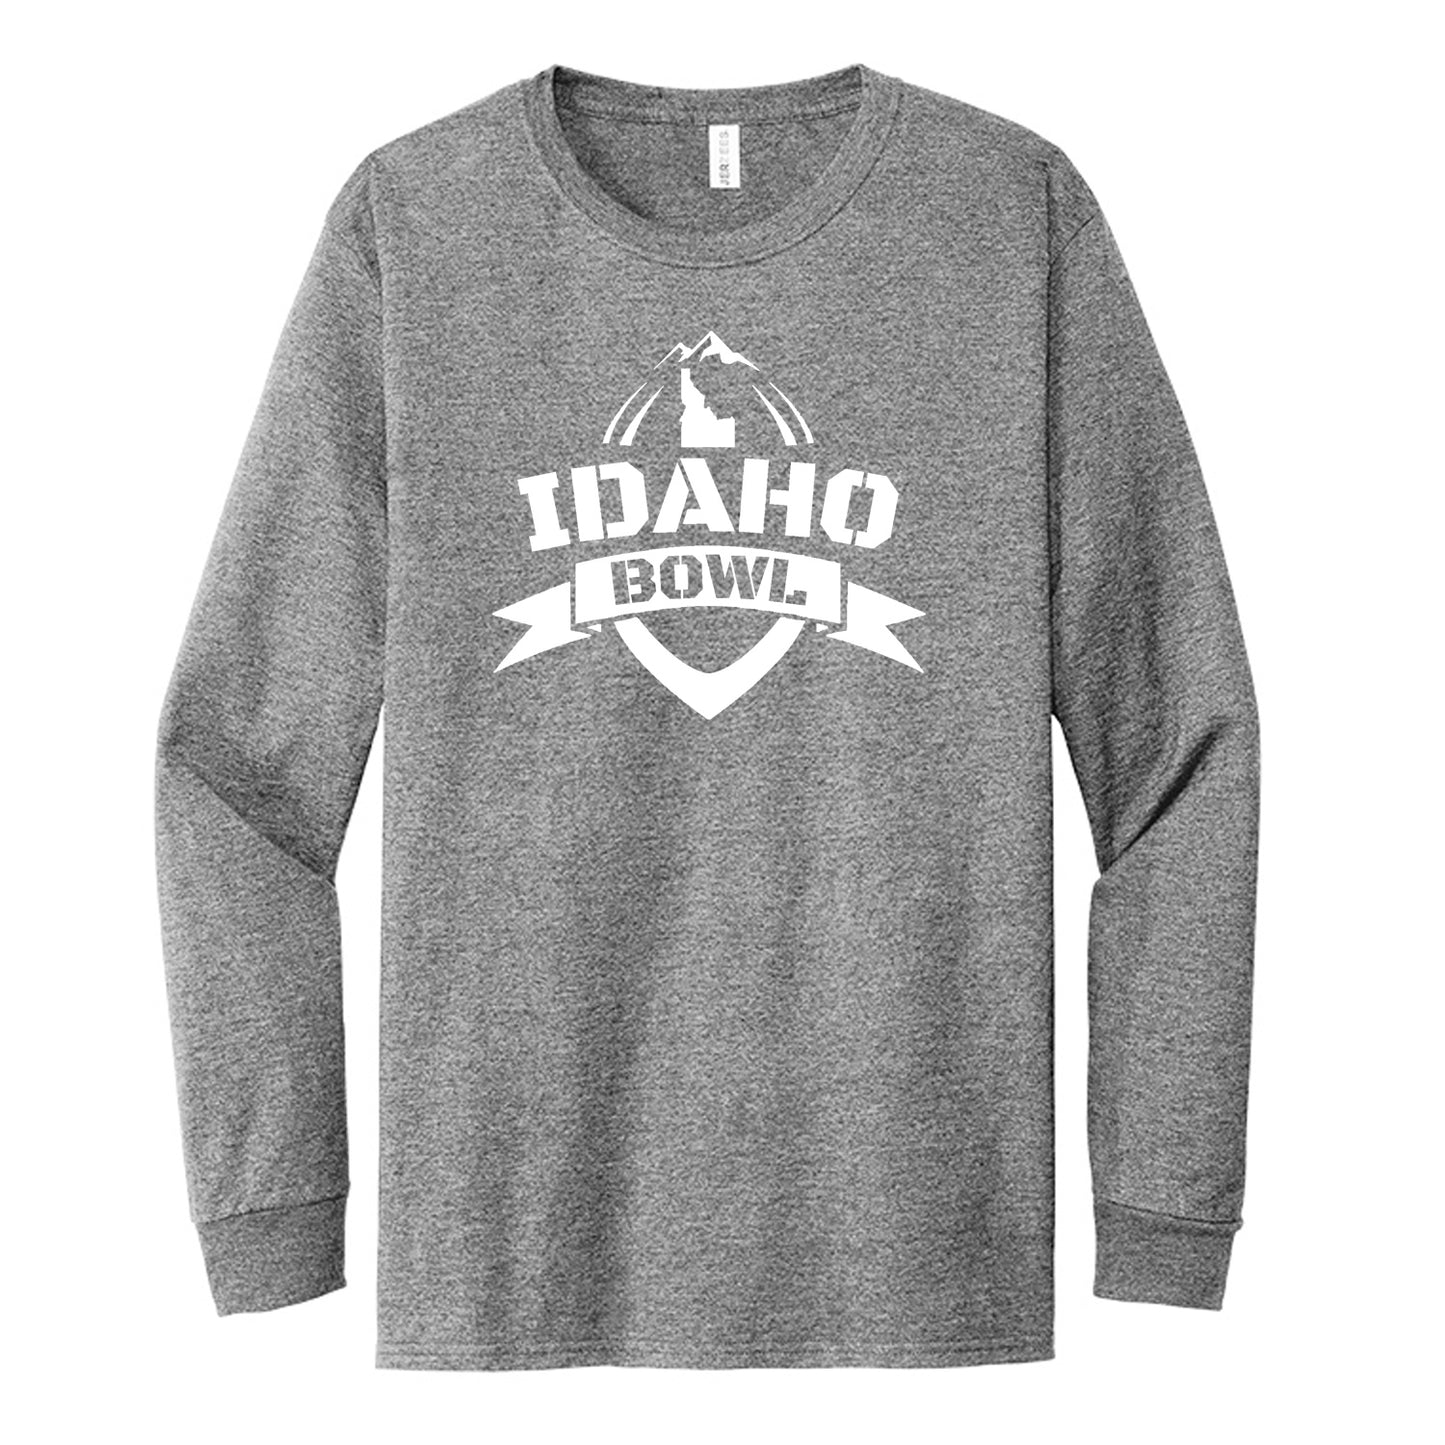 Idaho Bowl - Men's Premium Long Sleeve T-Shirt - 2 colors available